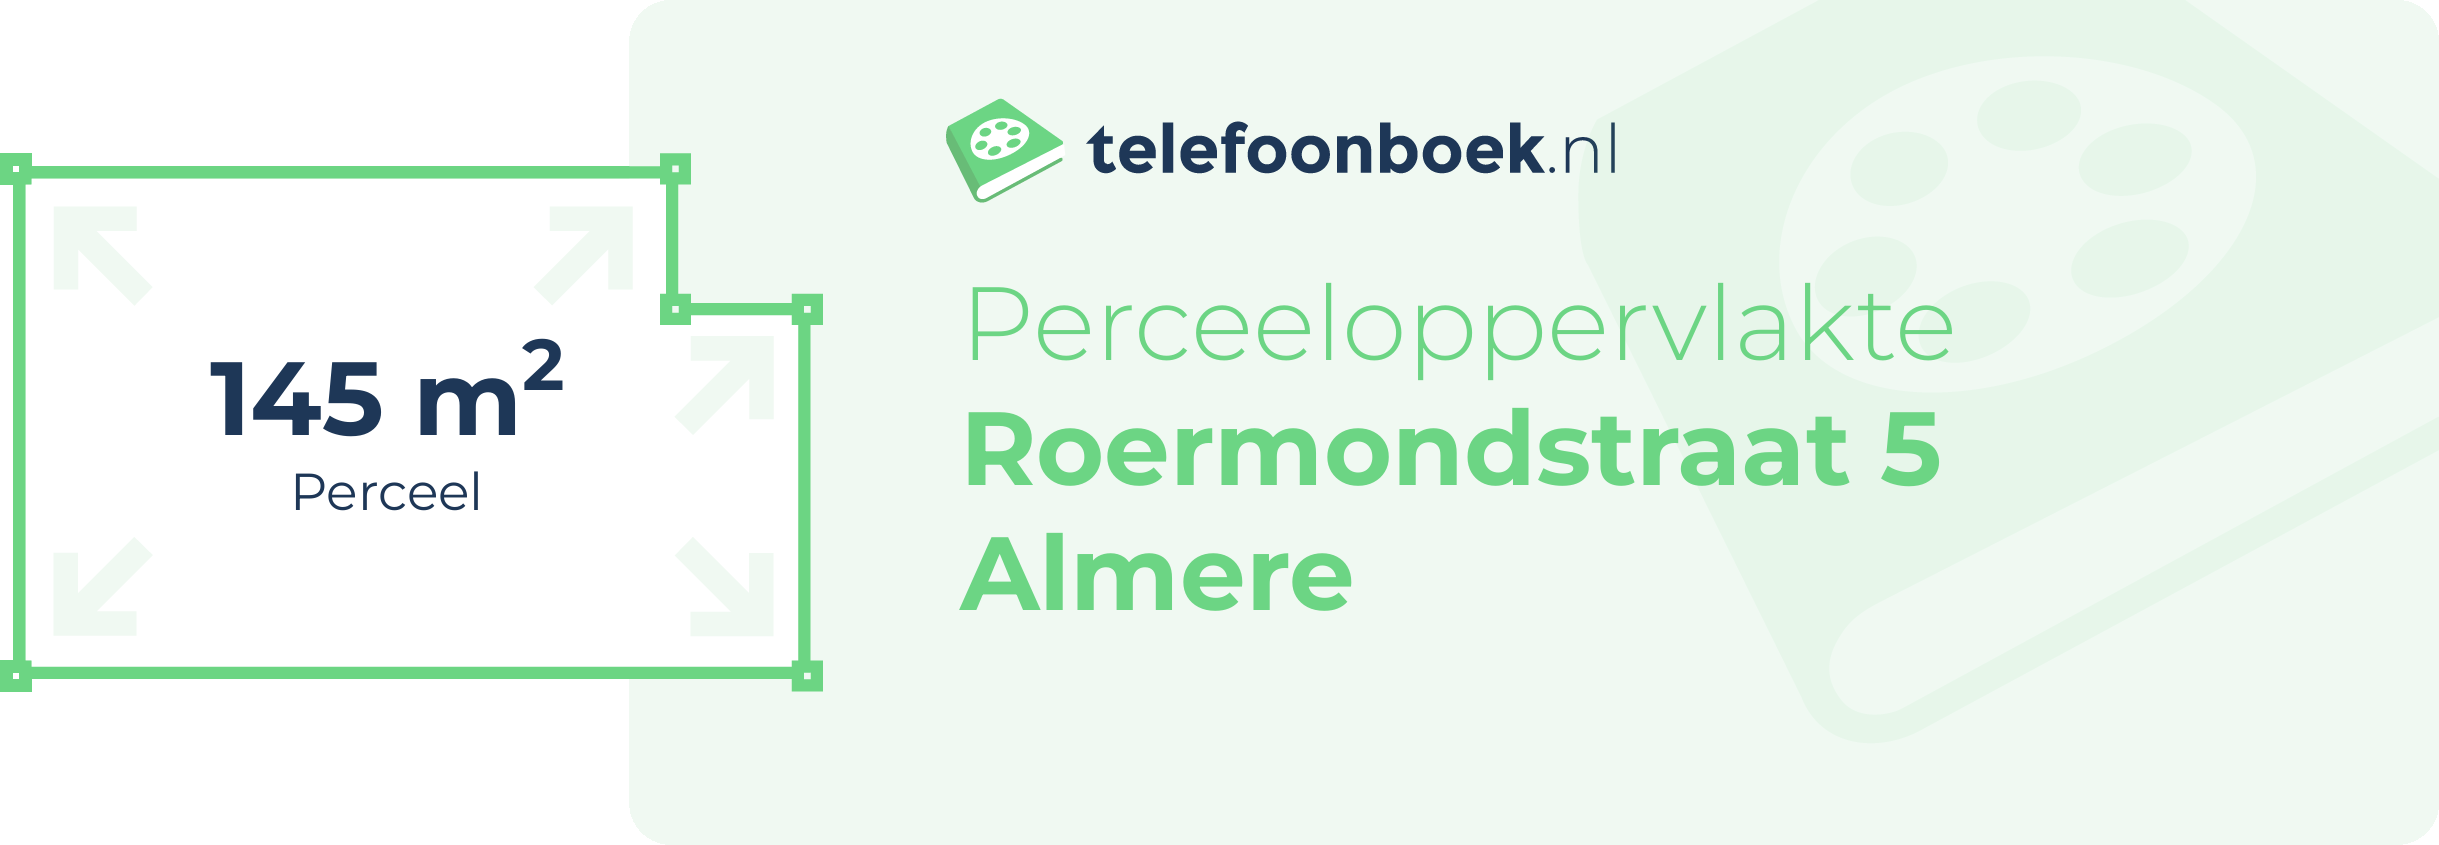 Perceeloppervlakte Roermondstraat 5 Almere